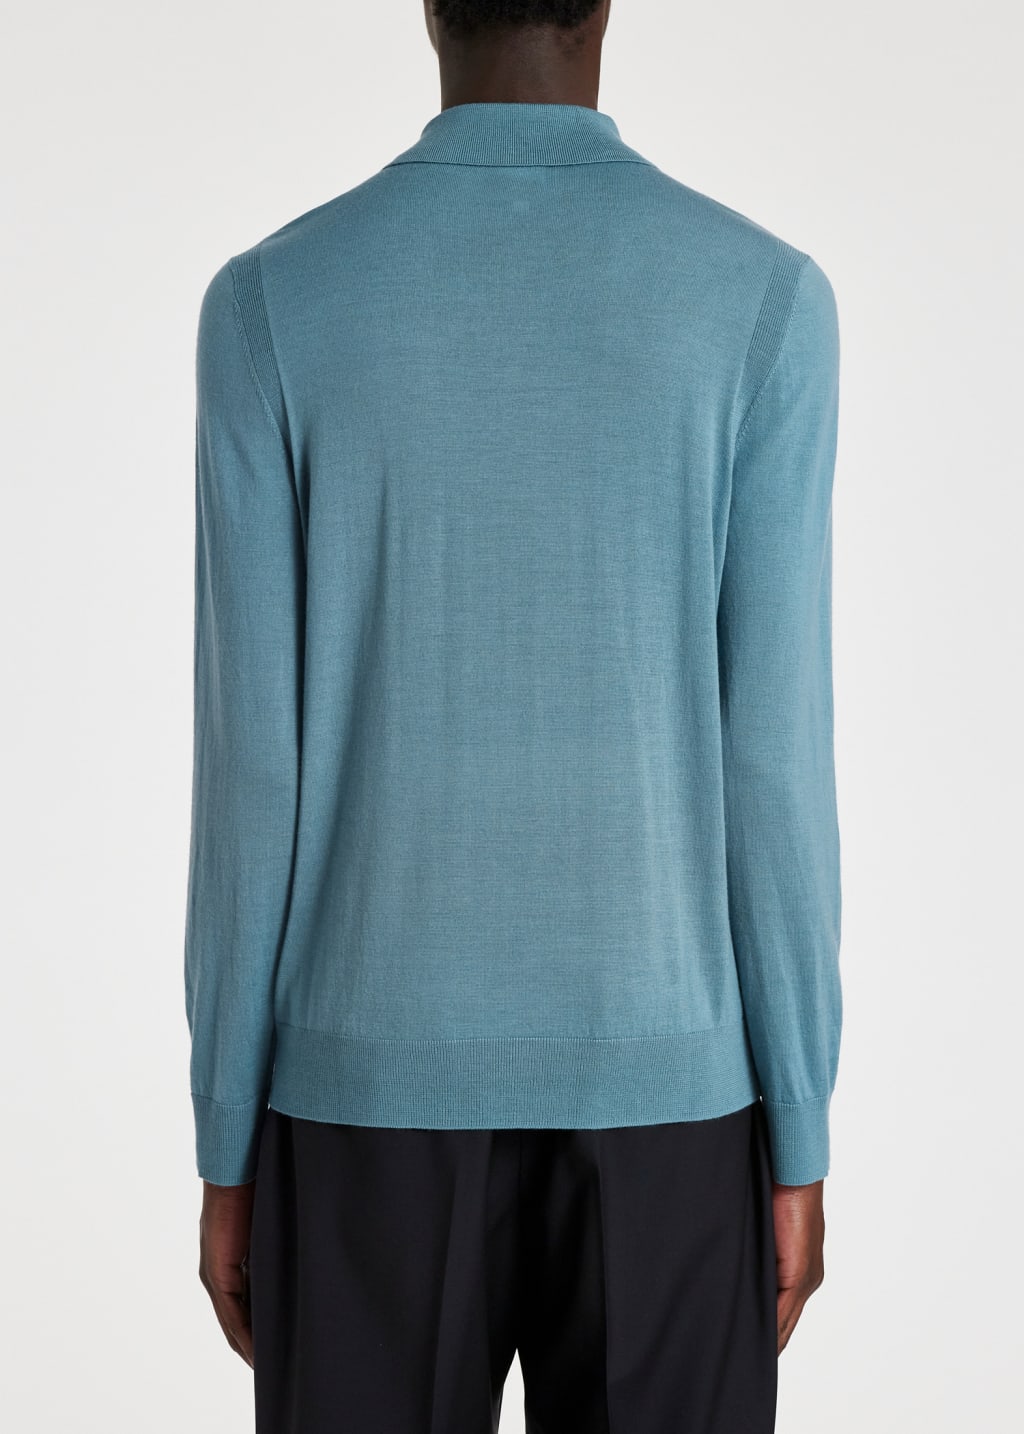 Model View - Light Blue Merino Wool Long-Sleeve Polo Shirt Paul Smith